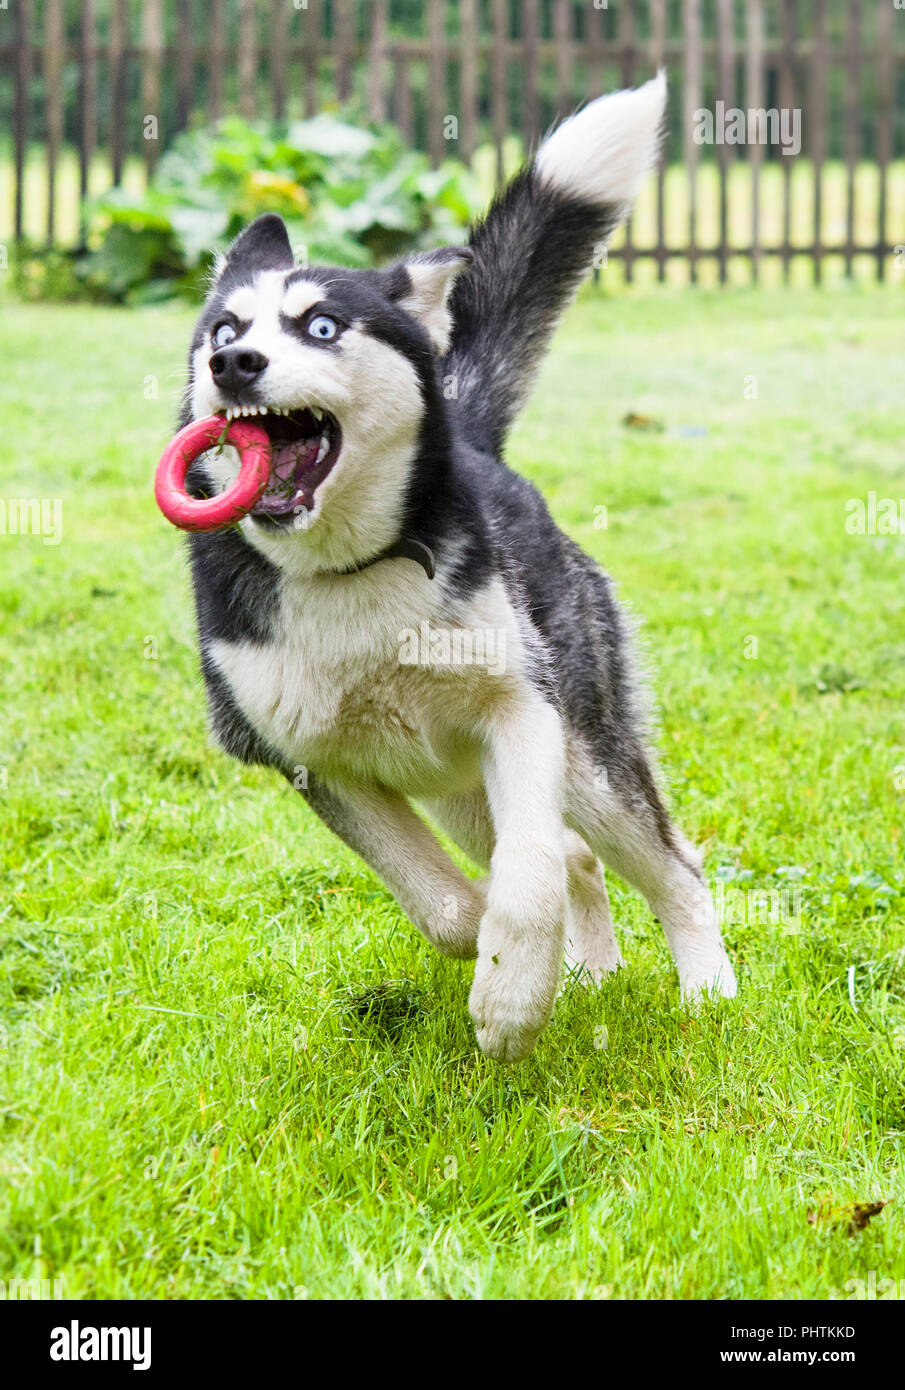 https://c8.alamy.com/comp/PHTKKD/cute-siberian-husky-puppy-play-toy-on-grass-cute-dog-PHTKKD.jpg